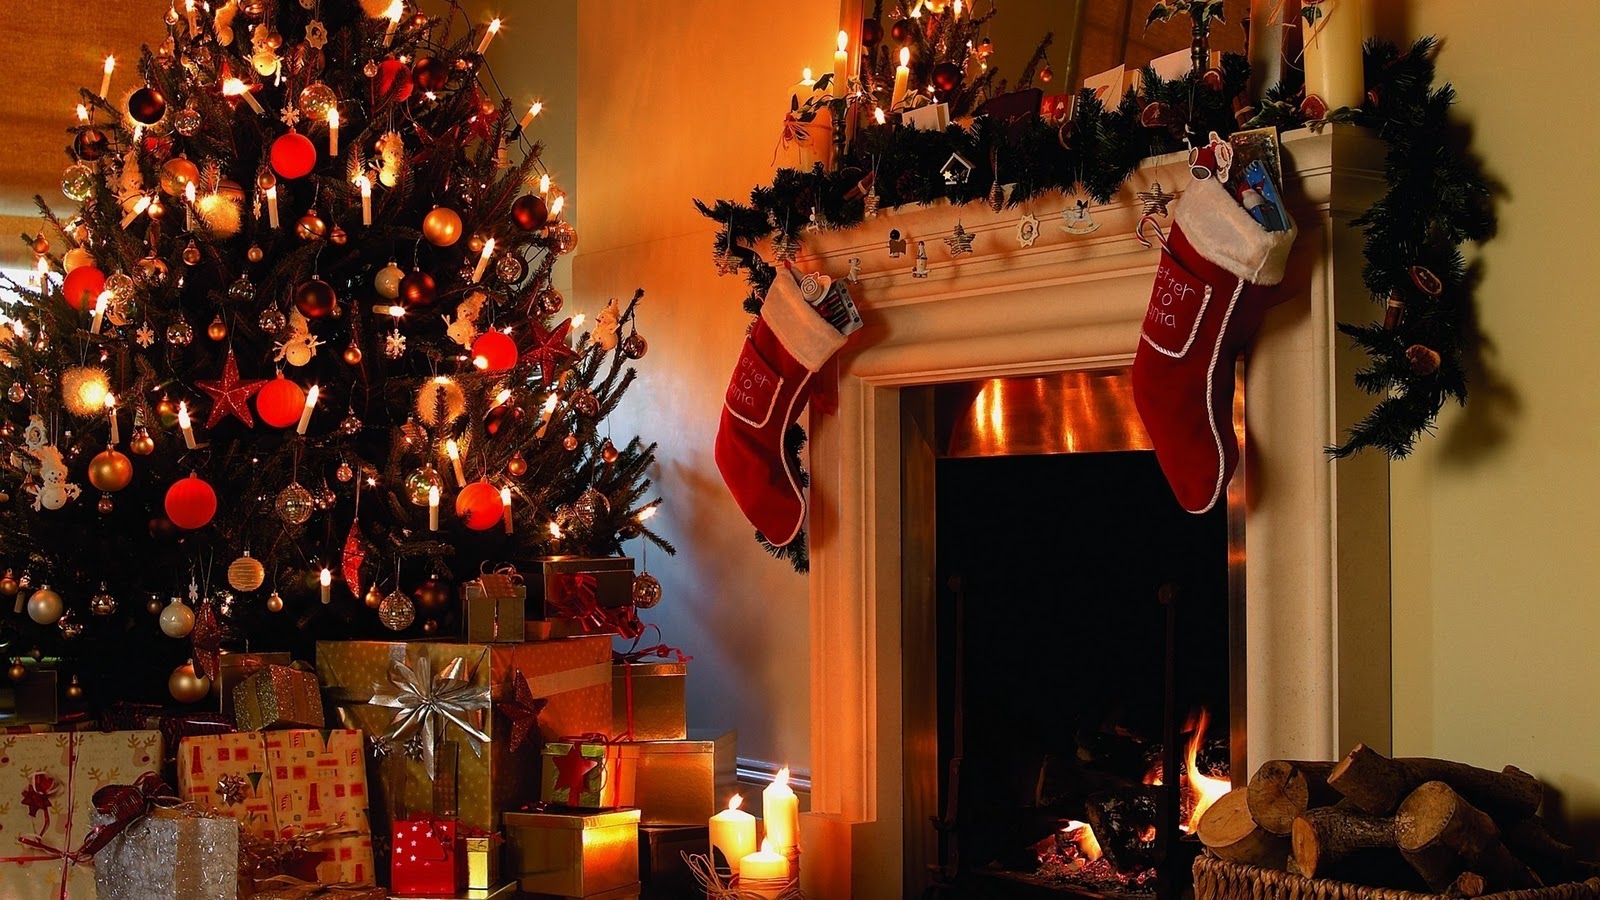 Christmas Fireplace Images  Free Download on Freepik